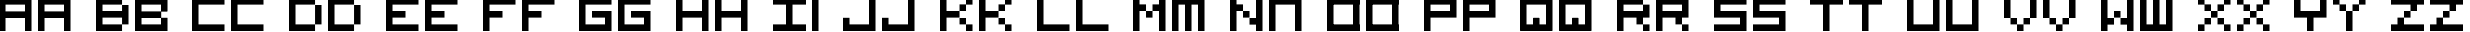 Пример написания английского алфавита шрифтом Visitor_Rus